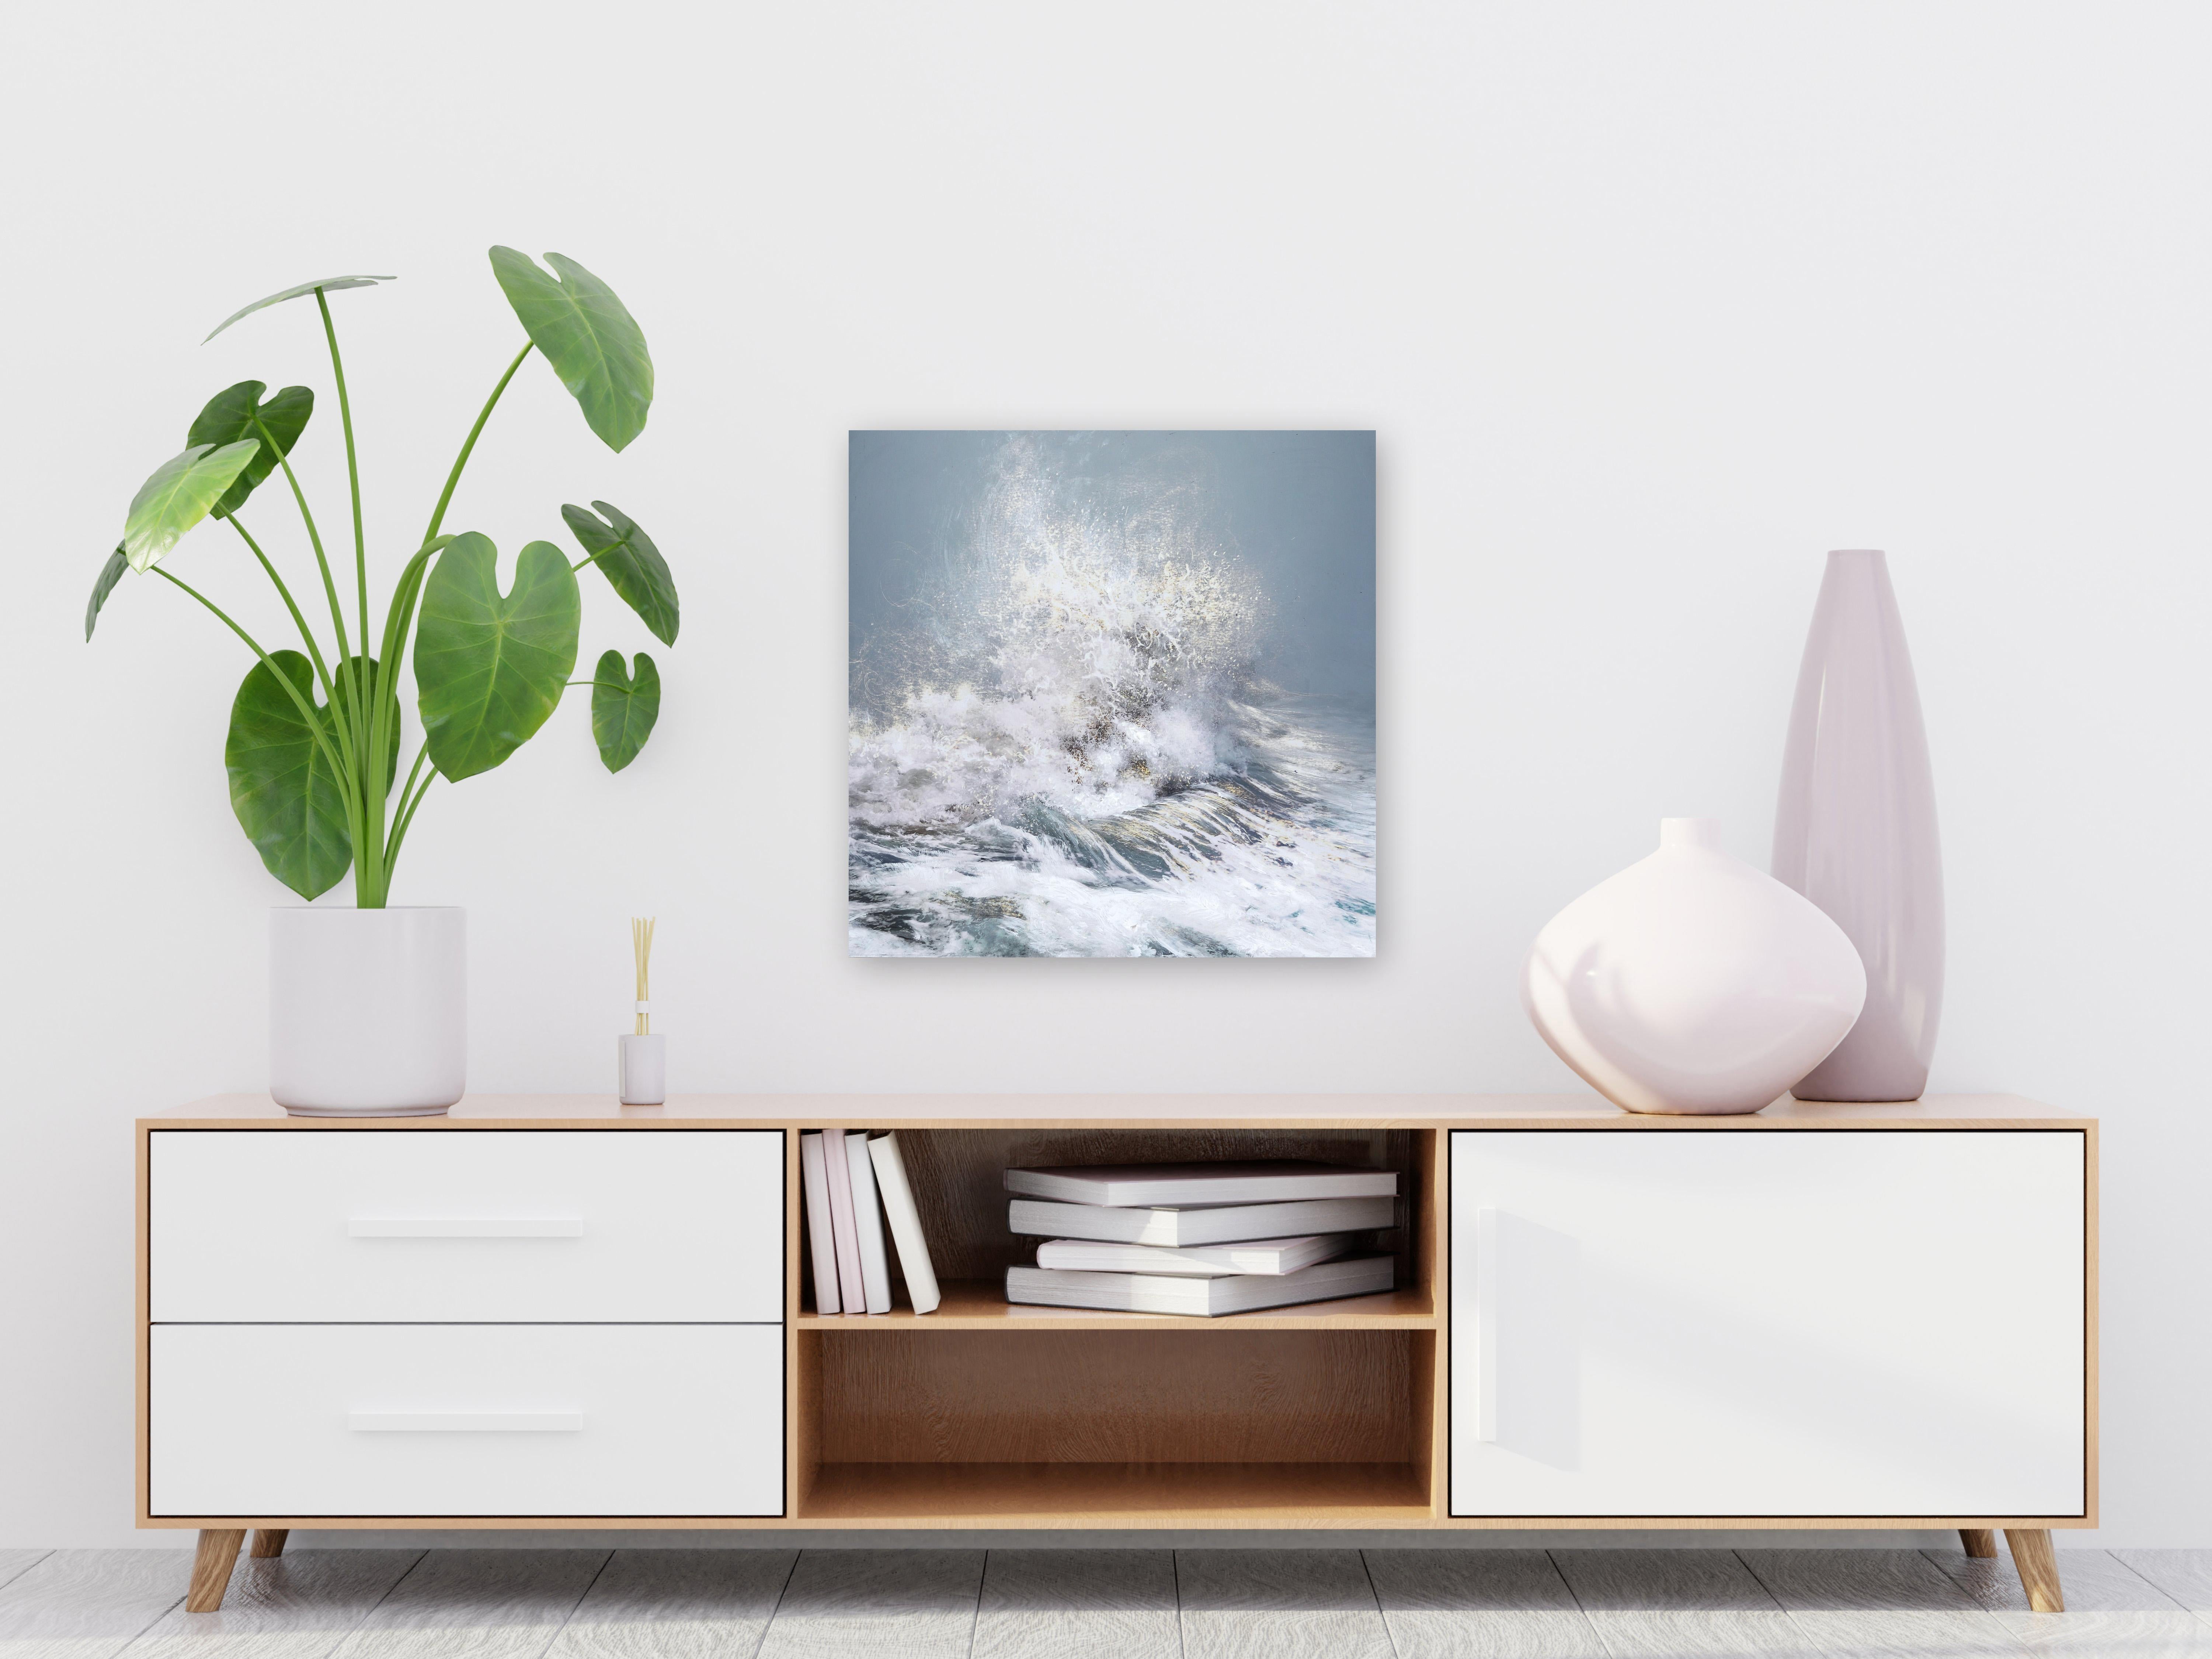 Heart & Soul Opens No. 1 – Fotorealistisches Gemälde mit kraftvollen Ozeanwellen (Fotorealismus), Mixed Media Art, von Steven Nederveen